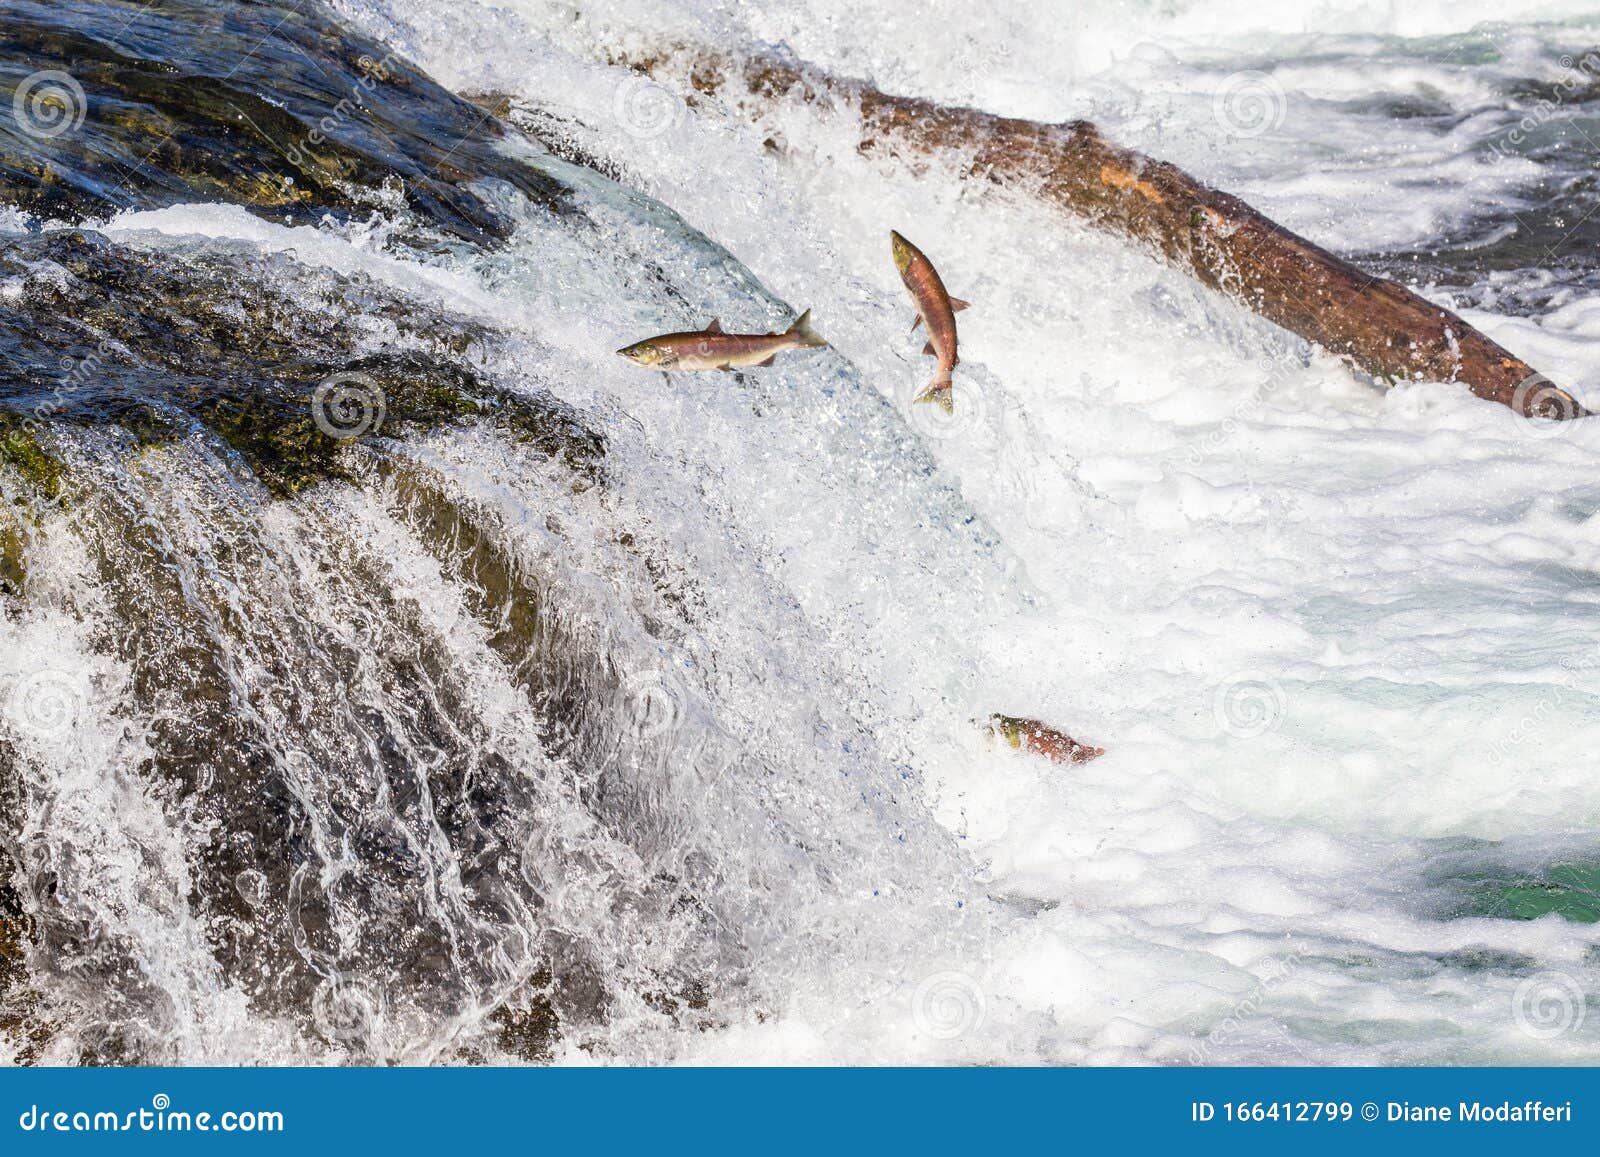 salmon jumping upstream at brooks falls in katmai, ak